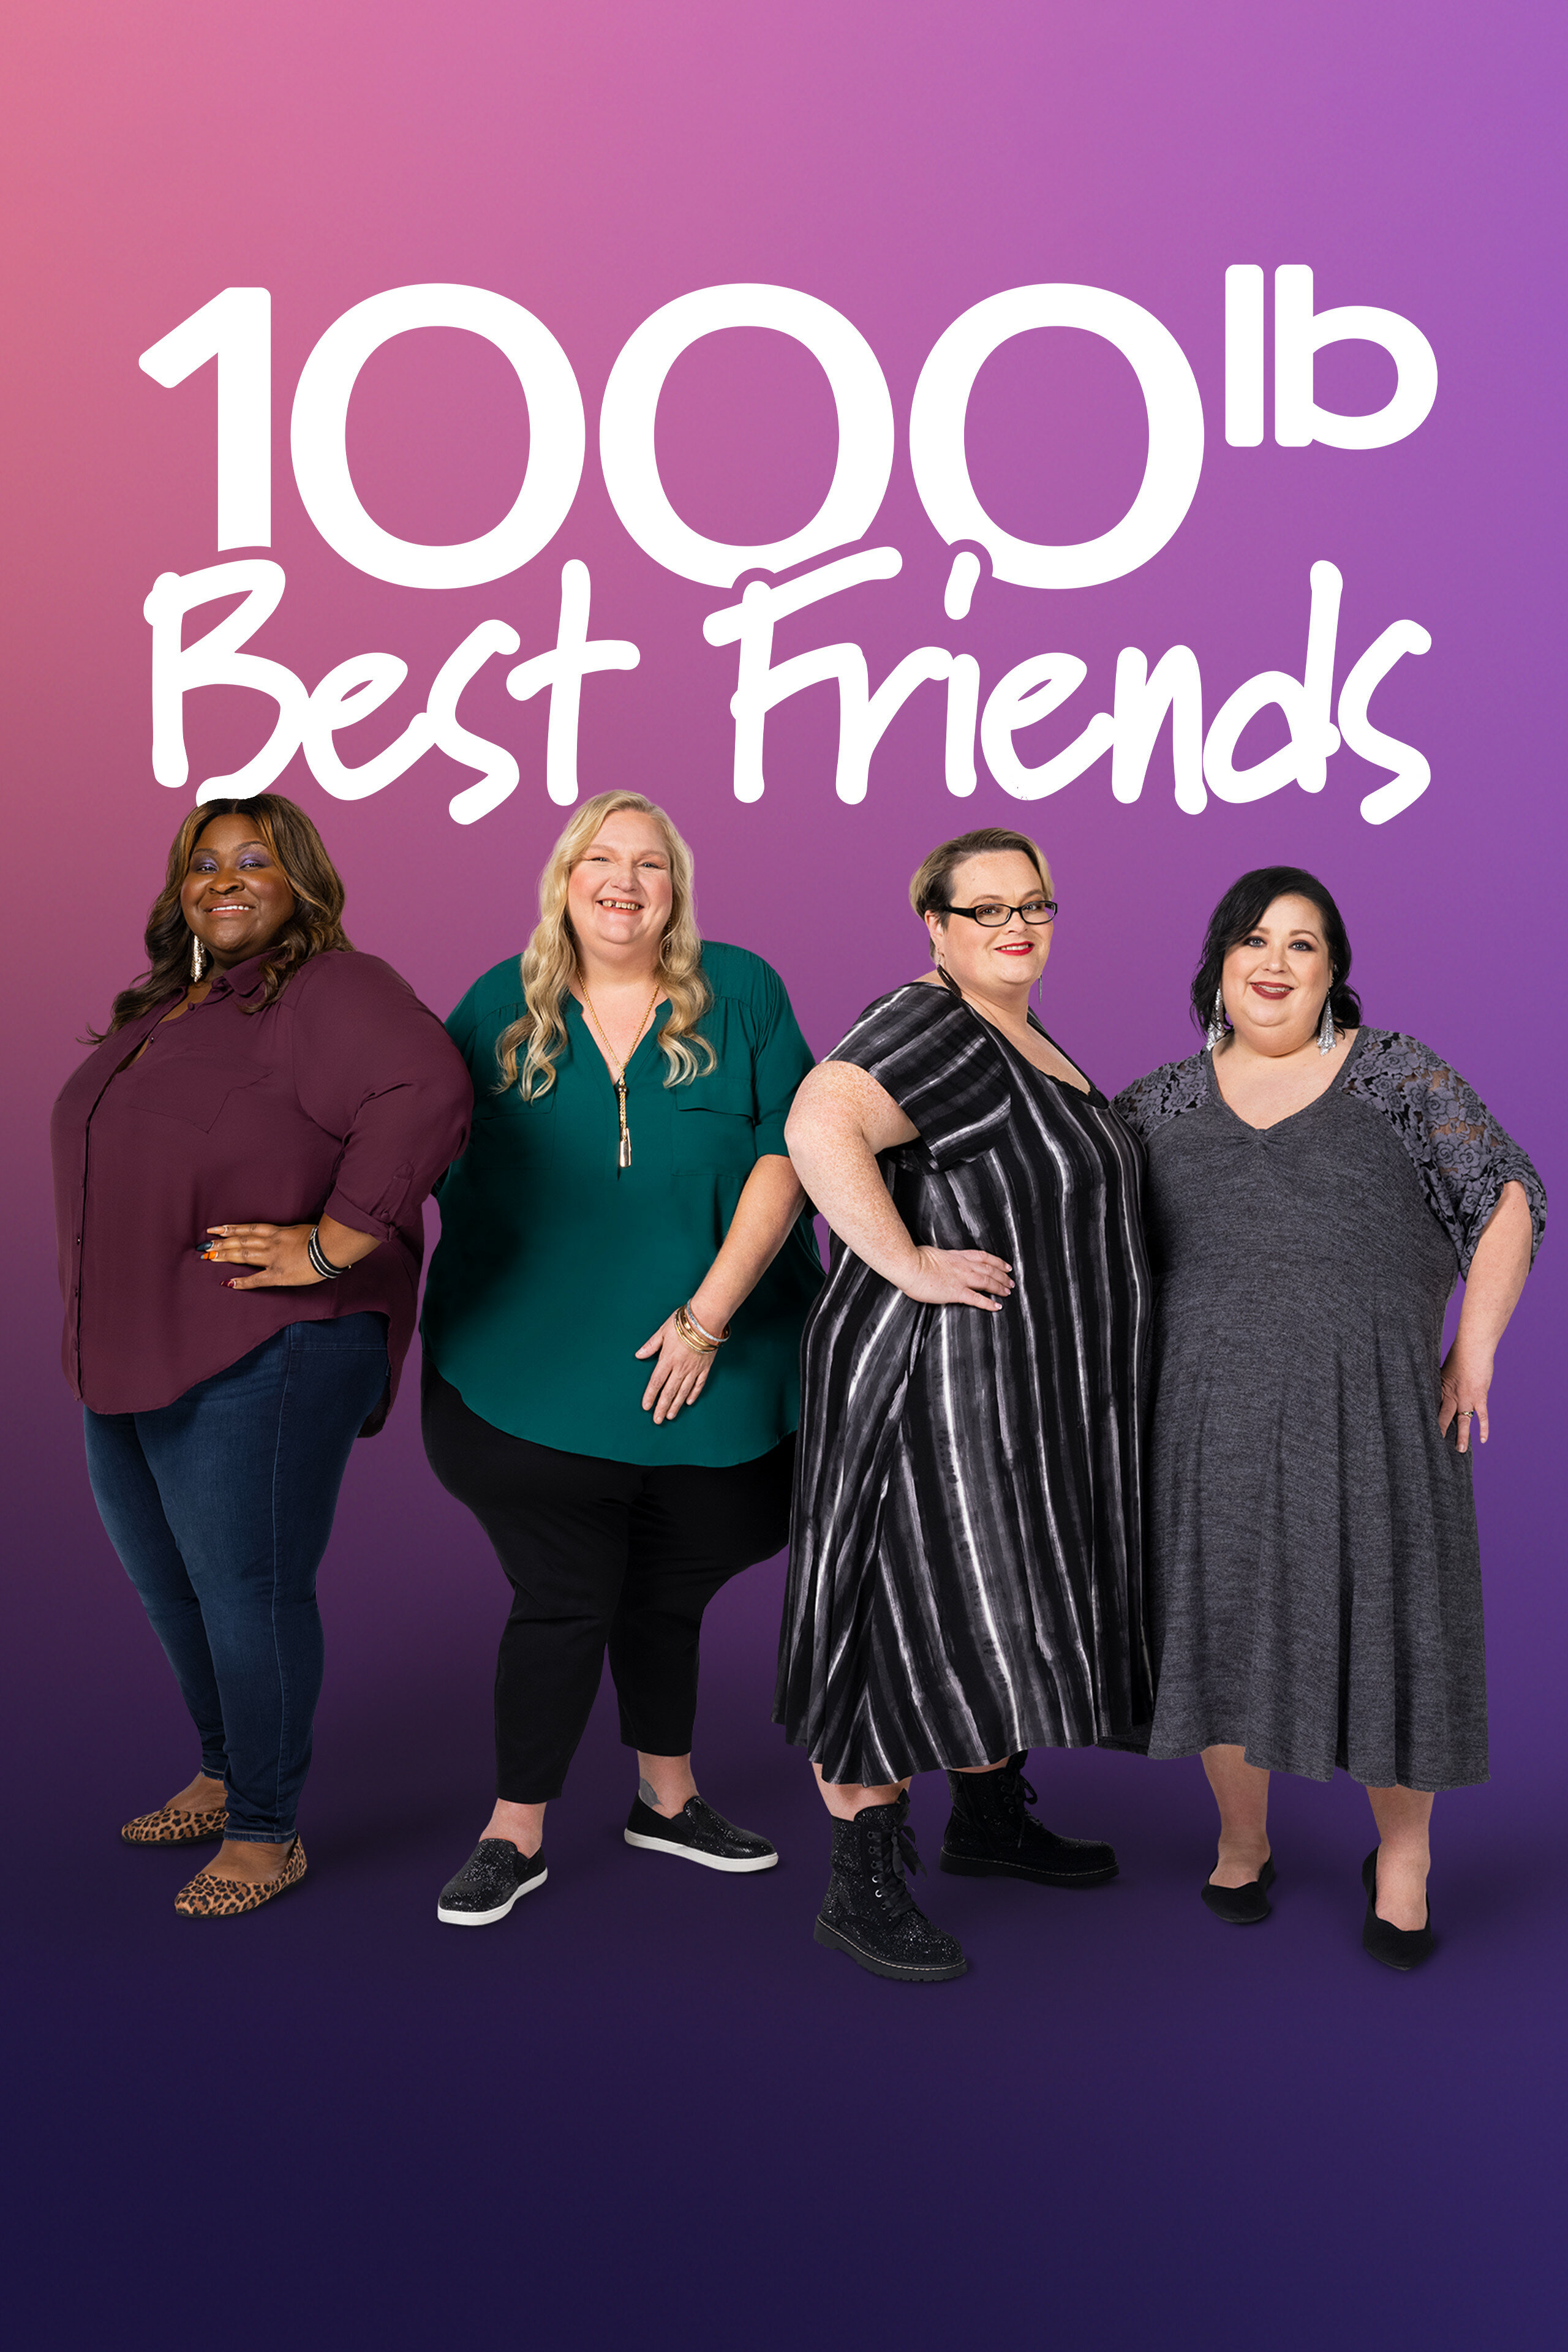 1000-lb. best friends simple twist of weight